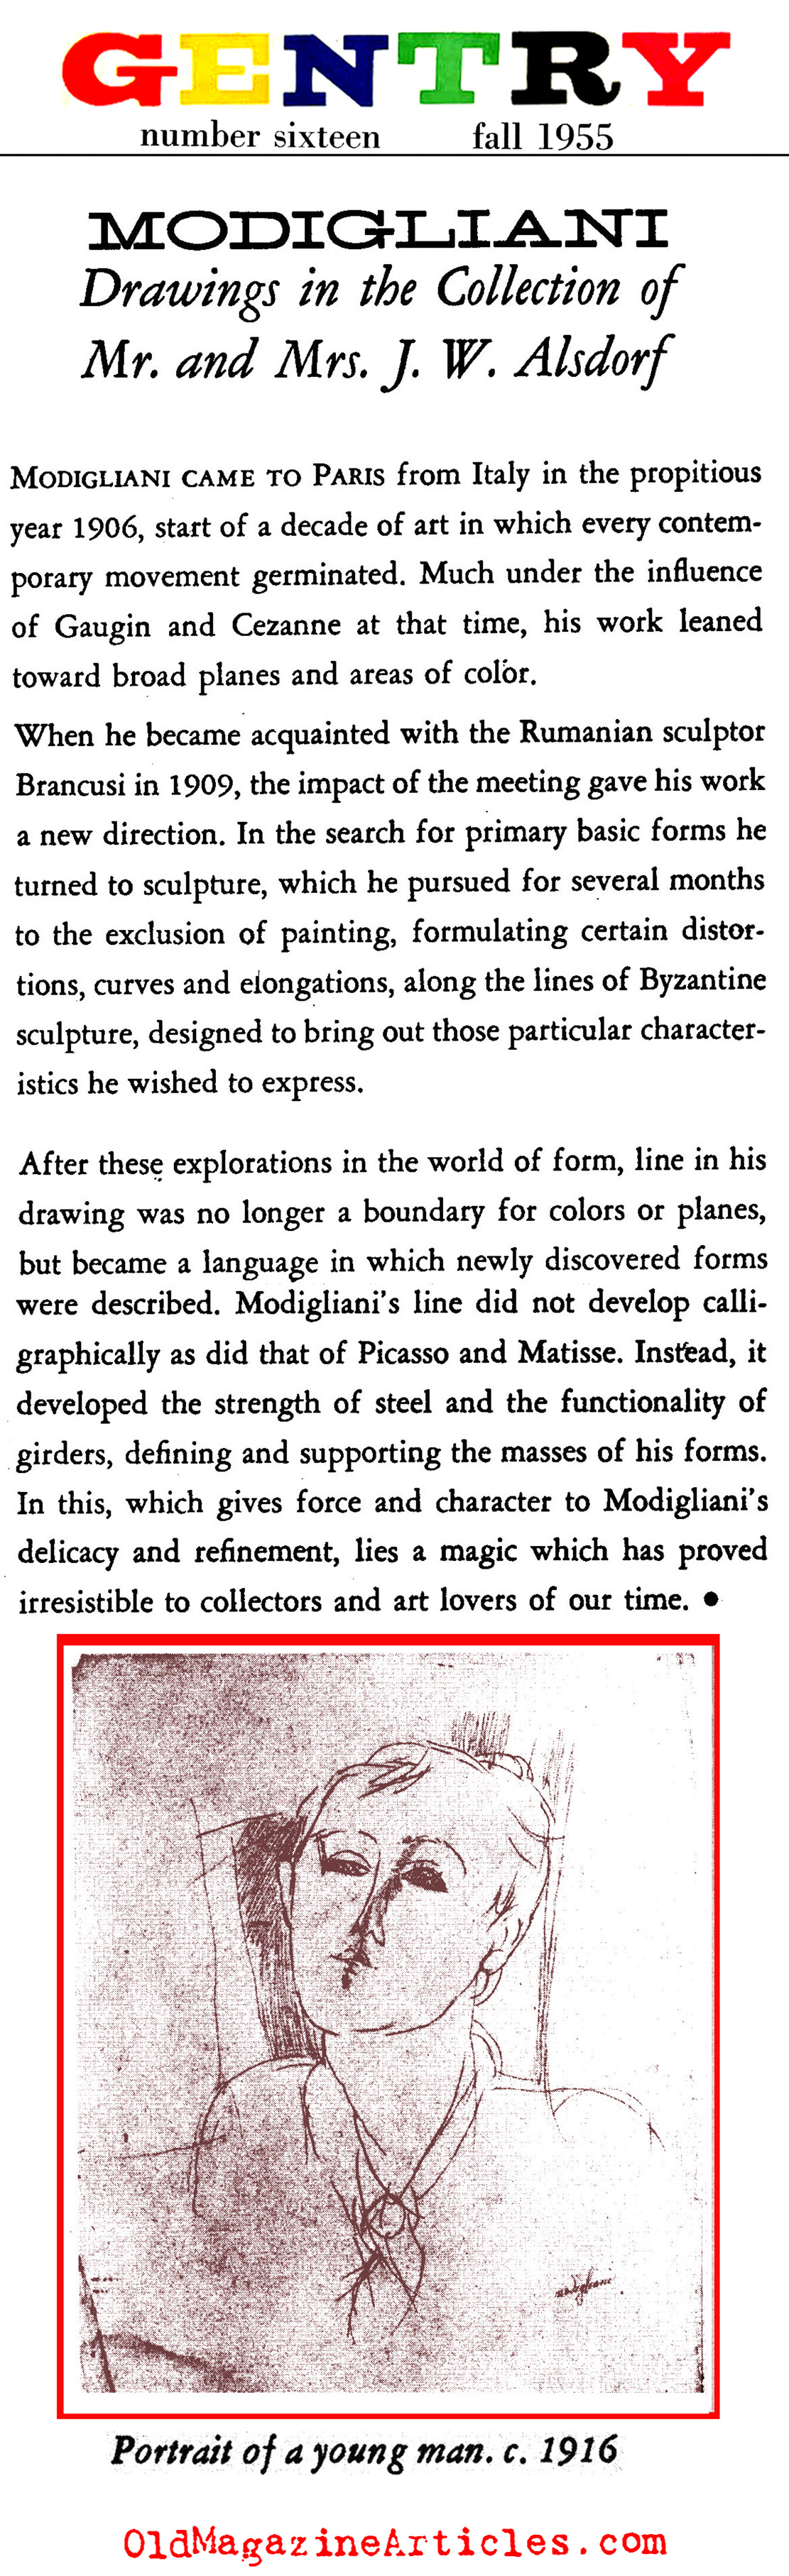 Modigliani in Paris (Gentry Magazine, 1955)